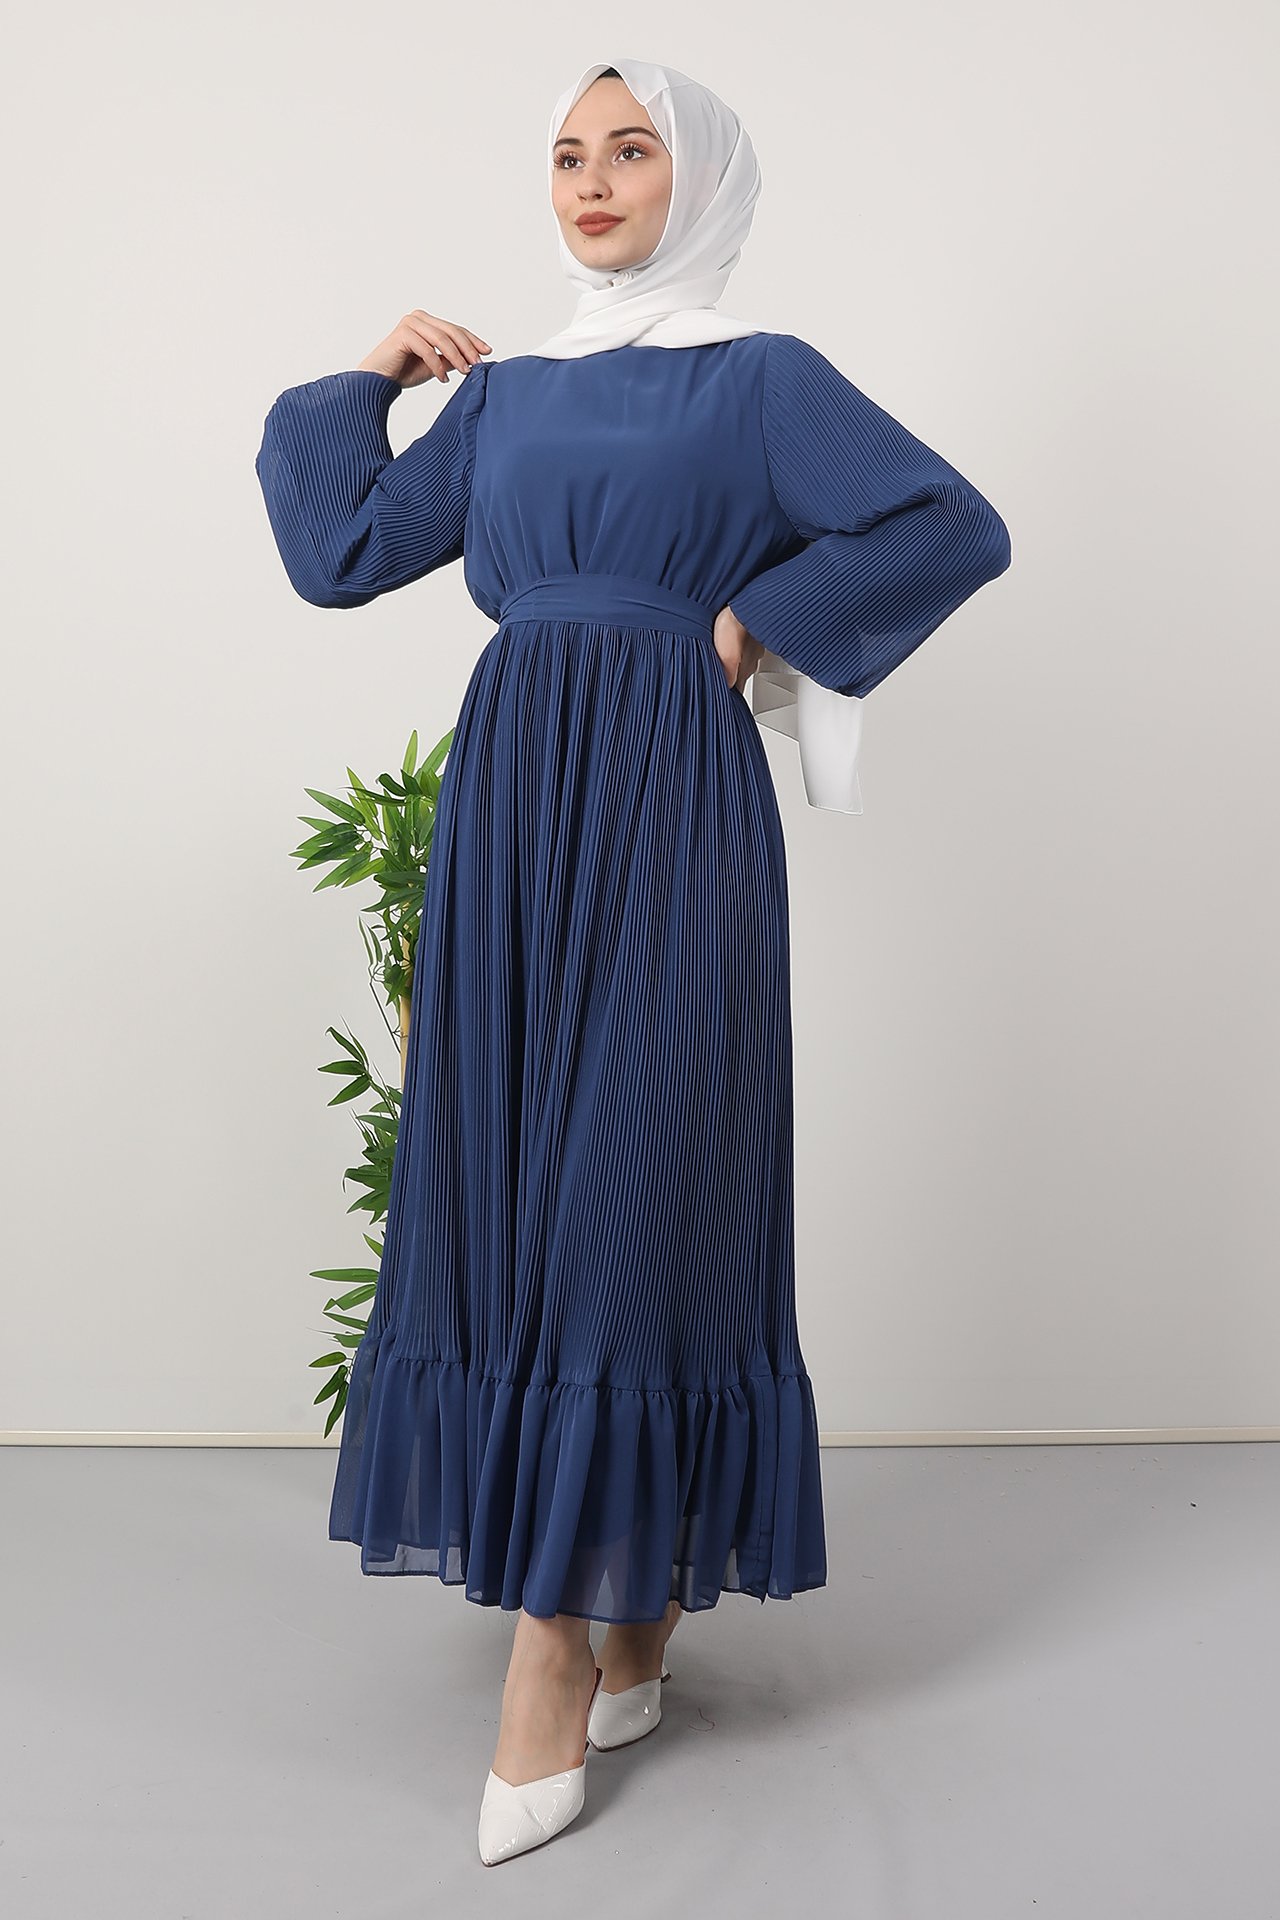 GİZAGİYİM - Beli Lastikli Pilisoley Elbise Koyu Mavi